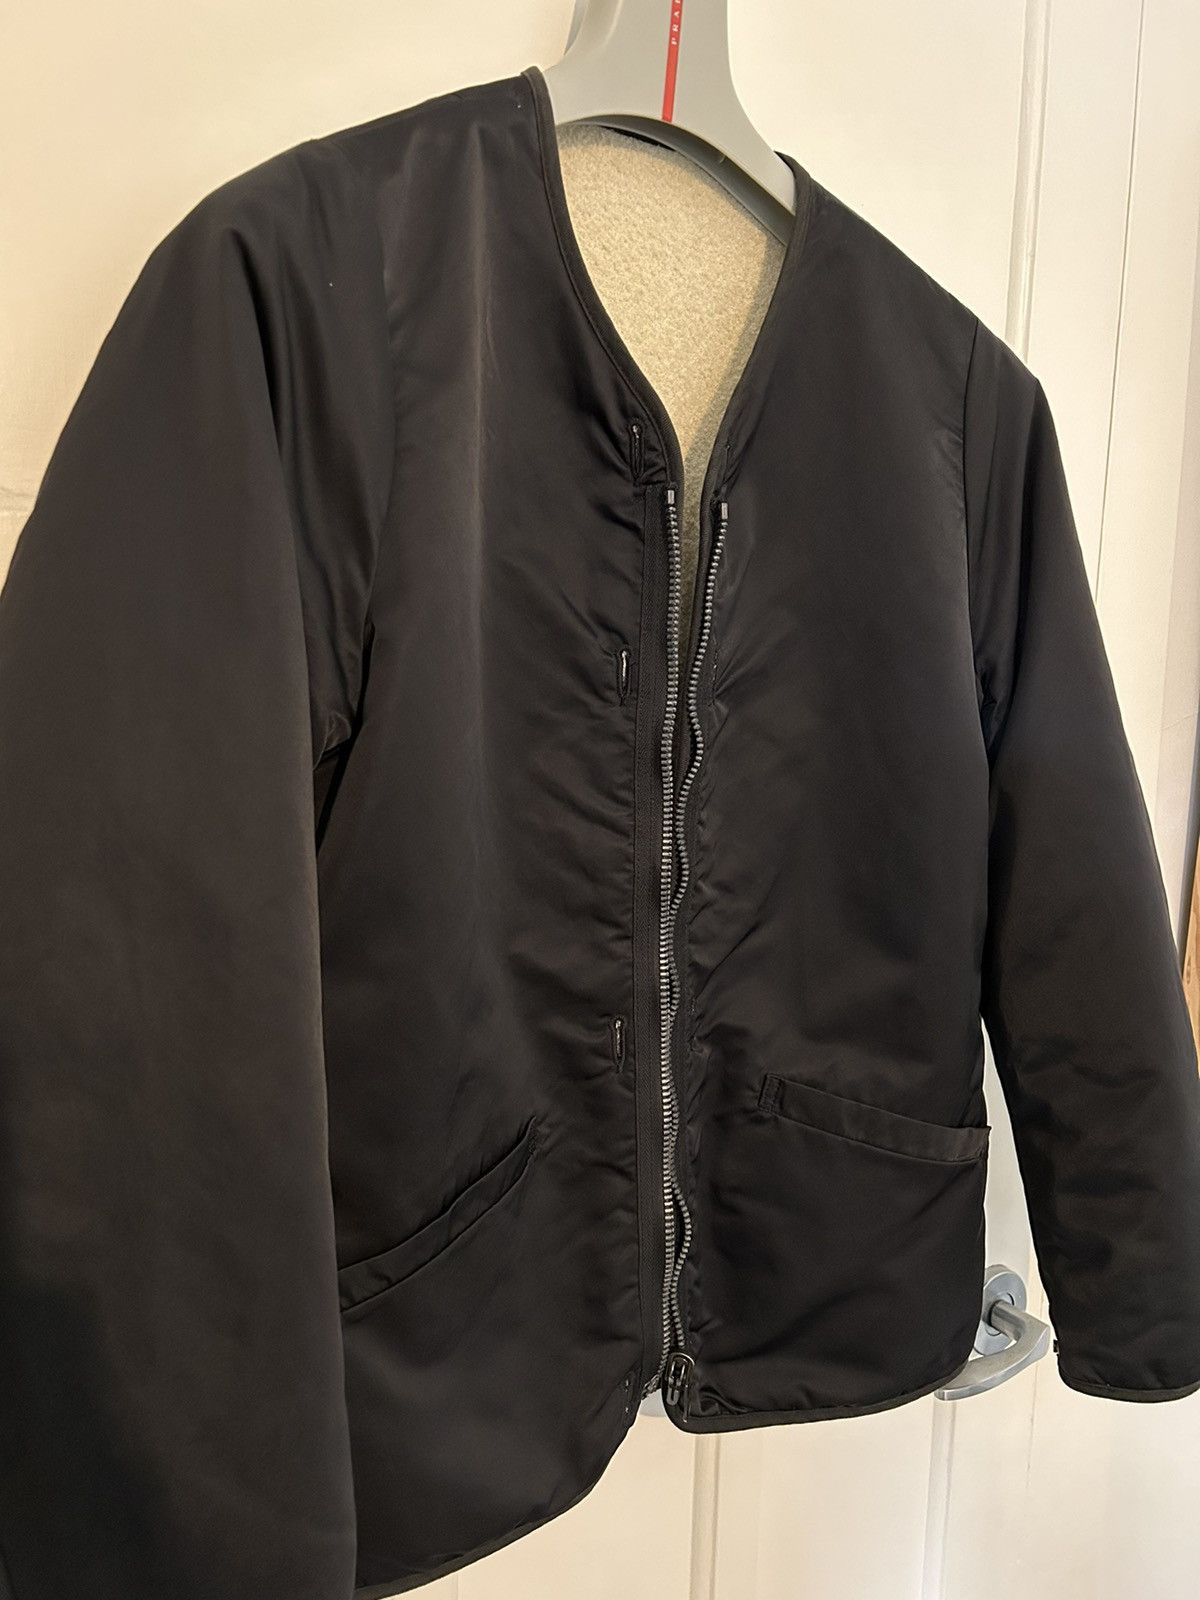 Visvim Visvim Iris Liner JKT Jacket 16AW Black 2 | Grailed